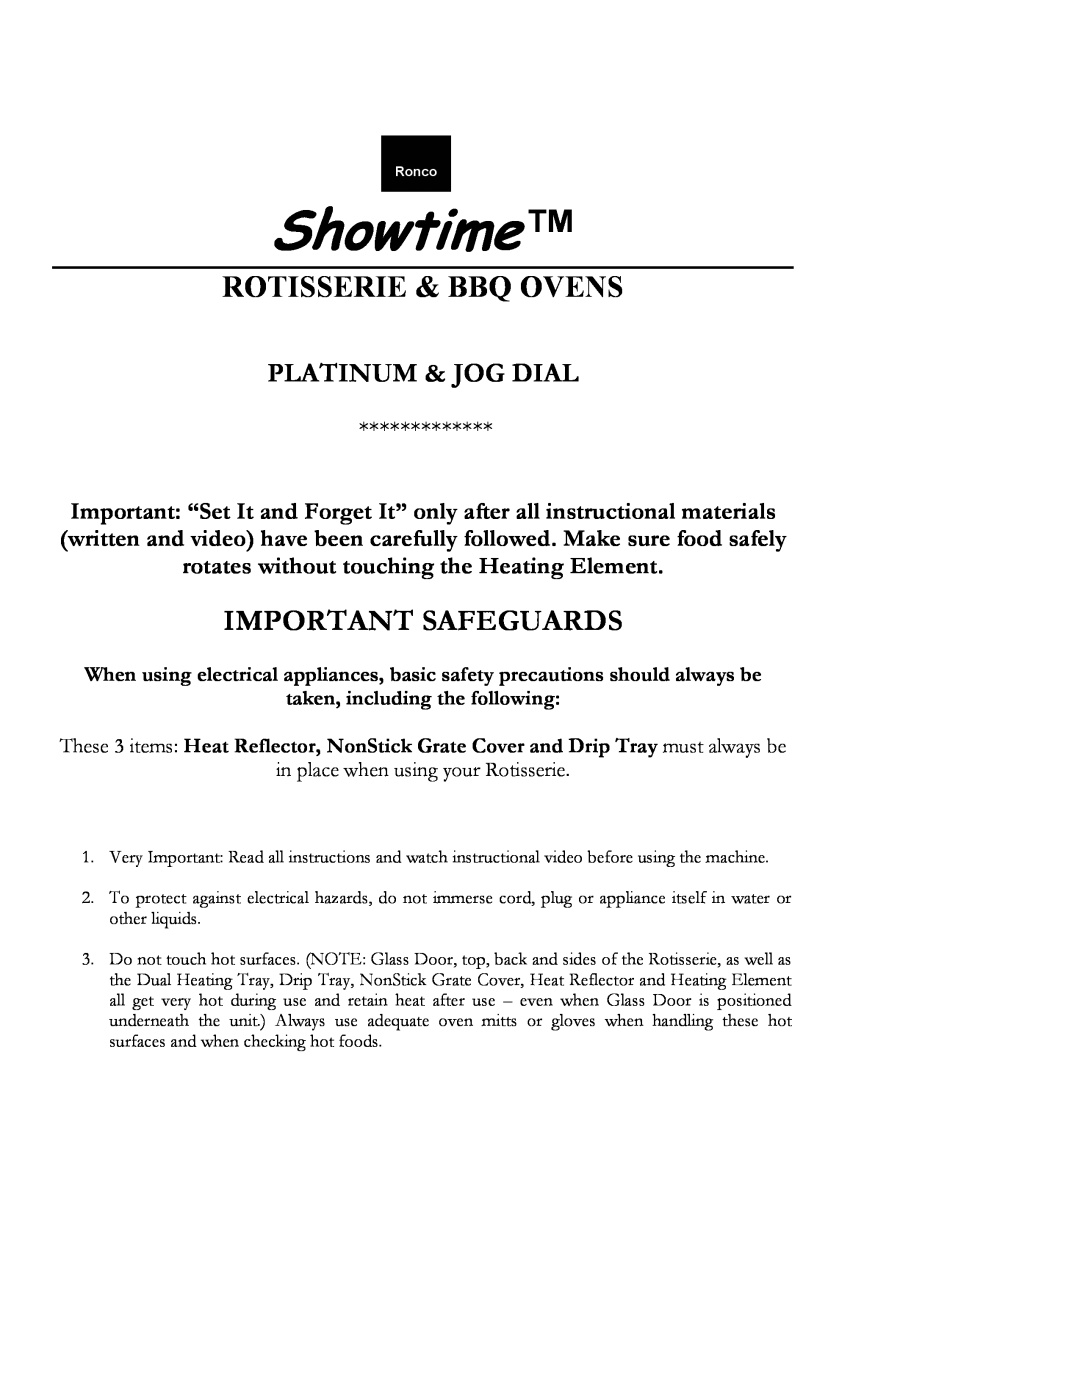 Ronco manual Showtime, Rotisserie & Bbq Ovens, Platinum & Jog Dial, Important Safeguards 